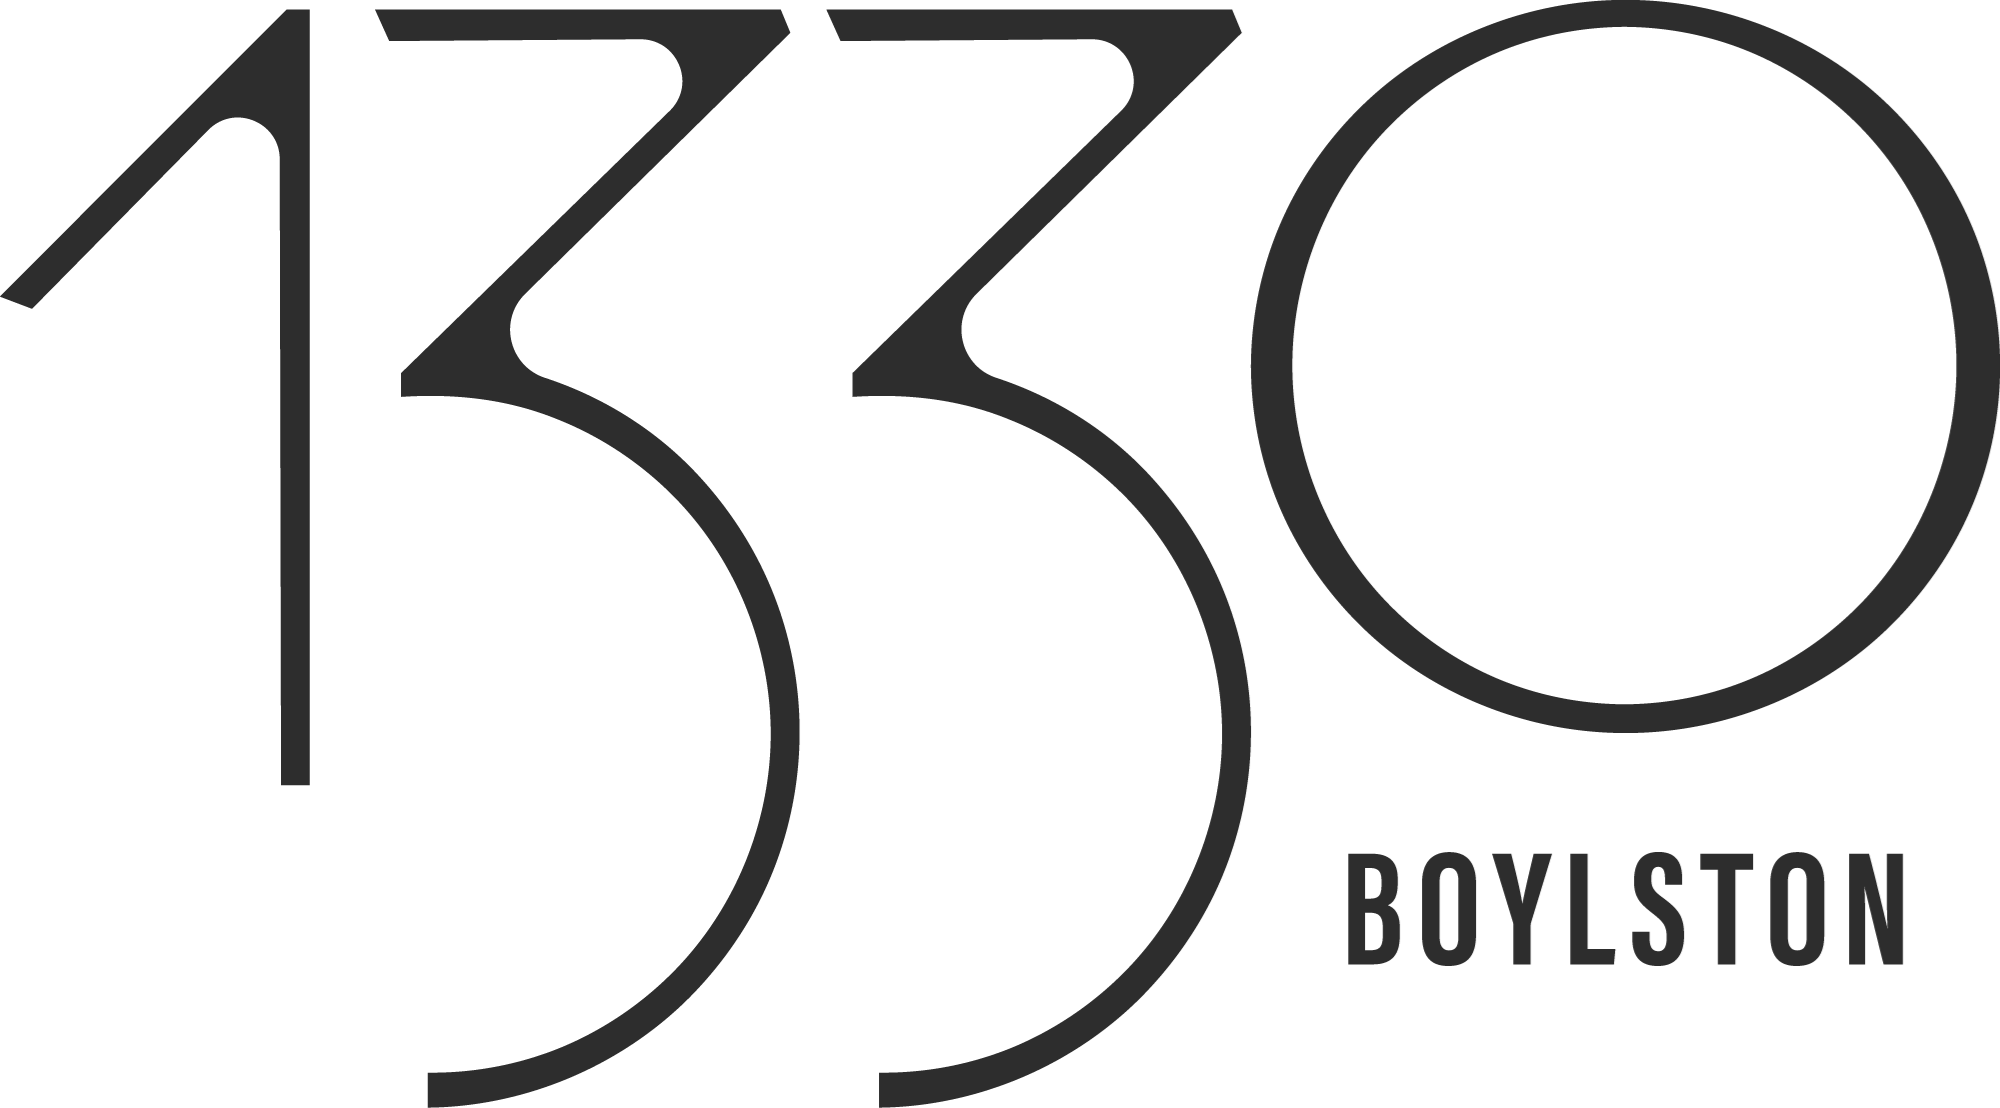 1330 Boylston logo